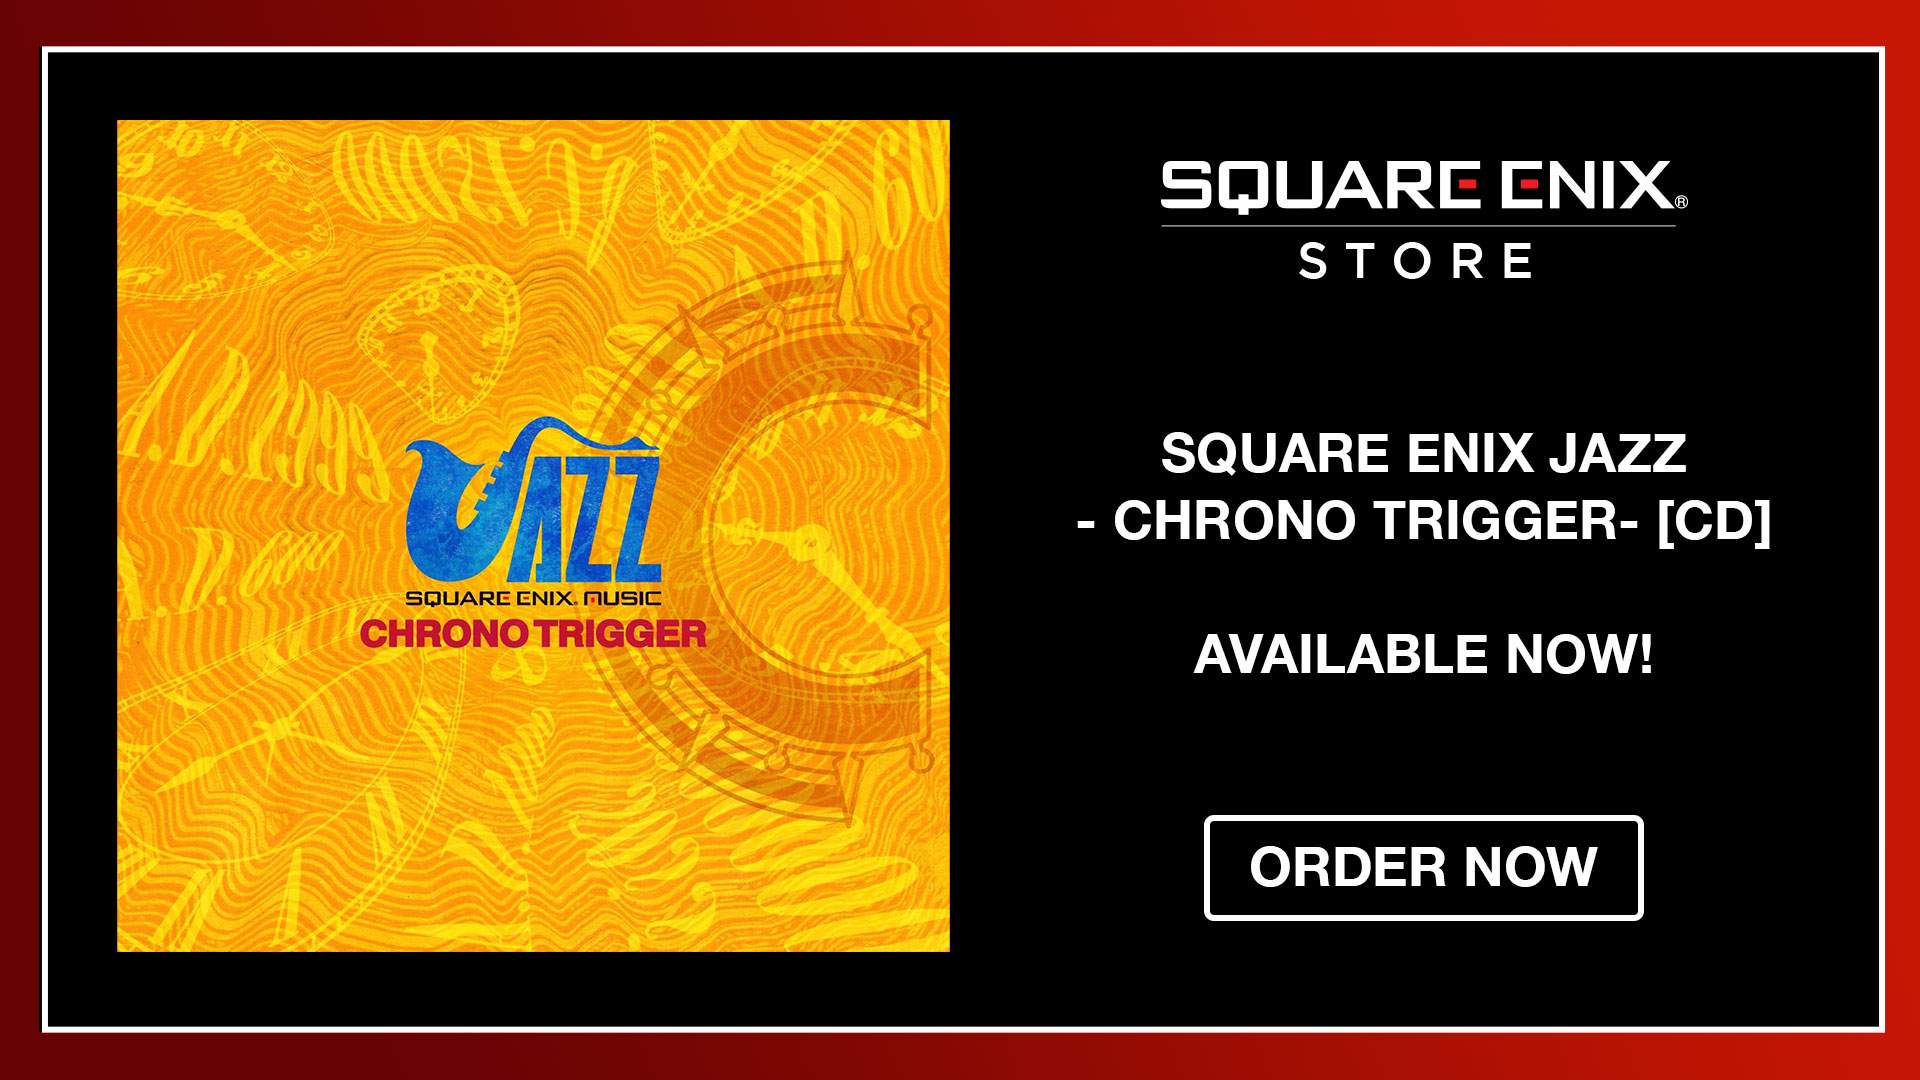 SQUARE ENIX JAZZ - CHRONO TRIGGER- [CD] album art